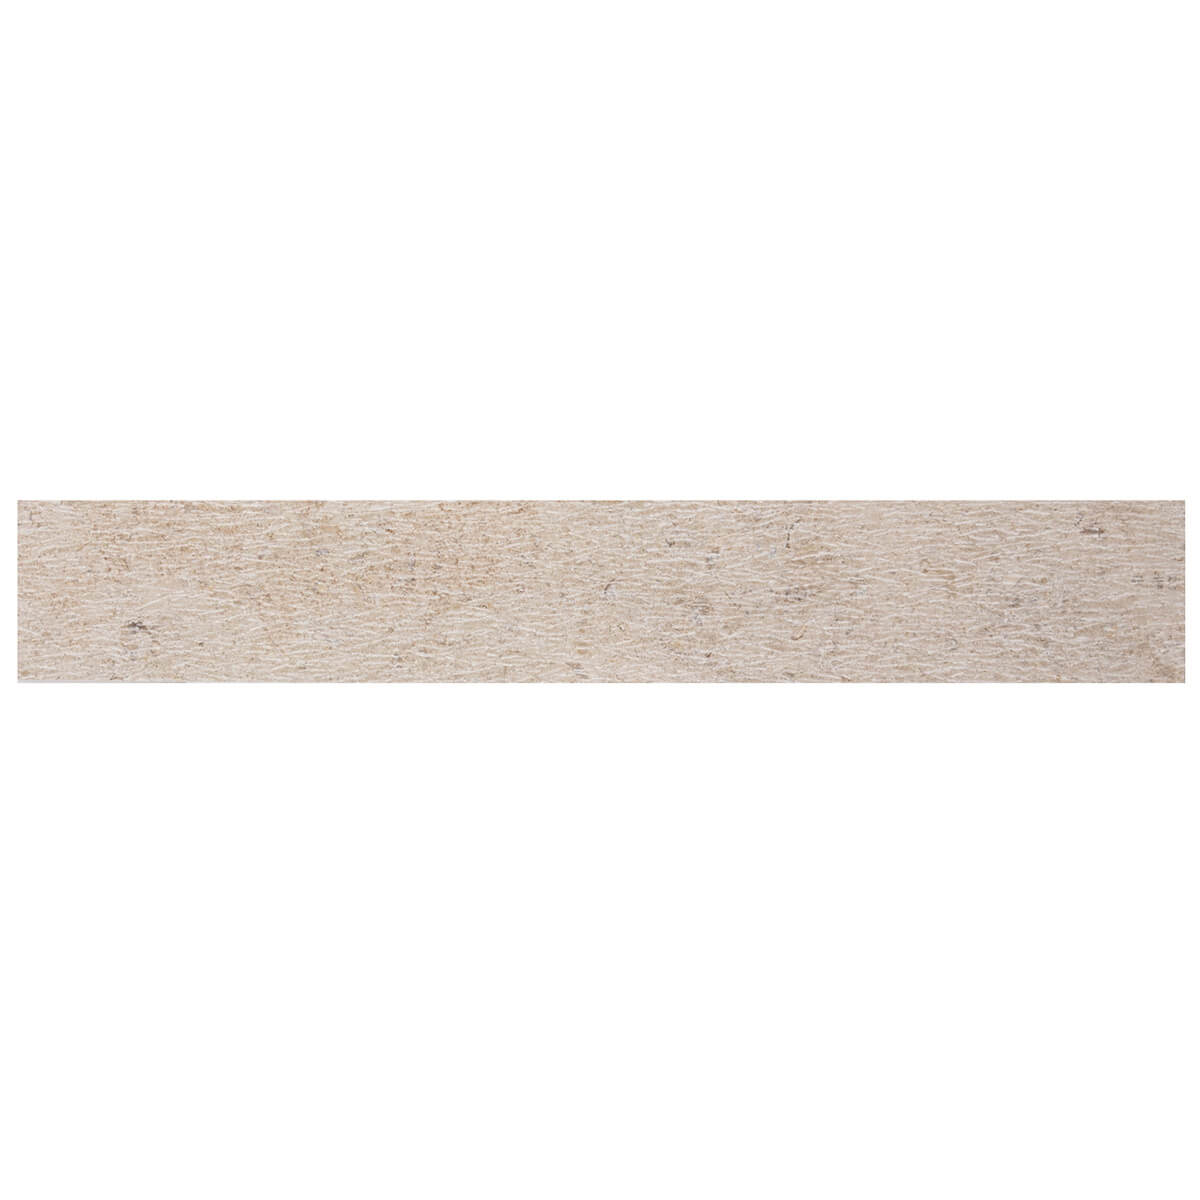 haussmann fonjone gascogne beige limestone rectangle natural stone field tile 4x24 linen